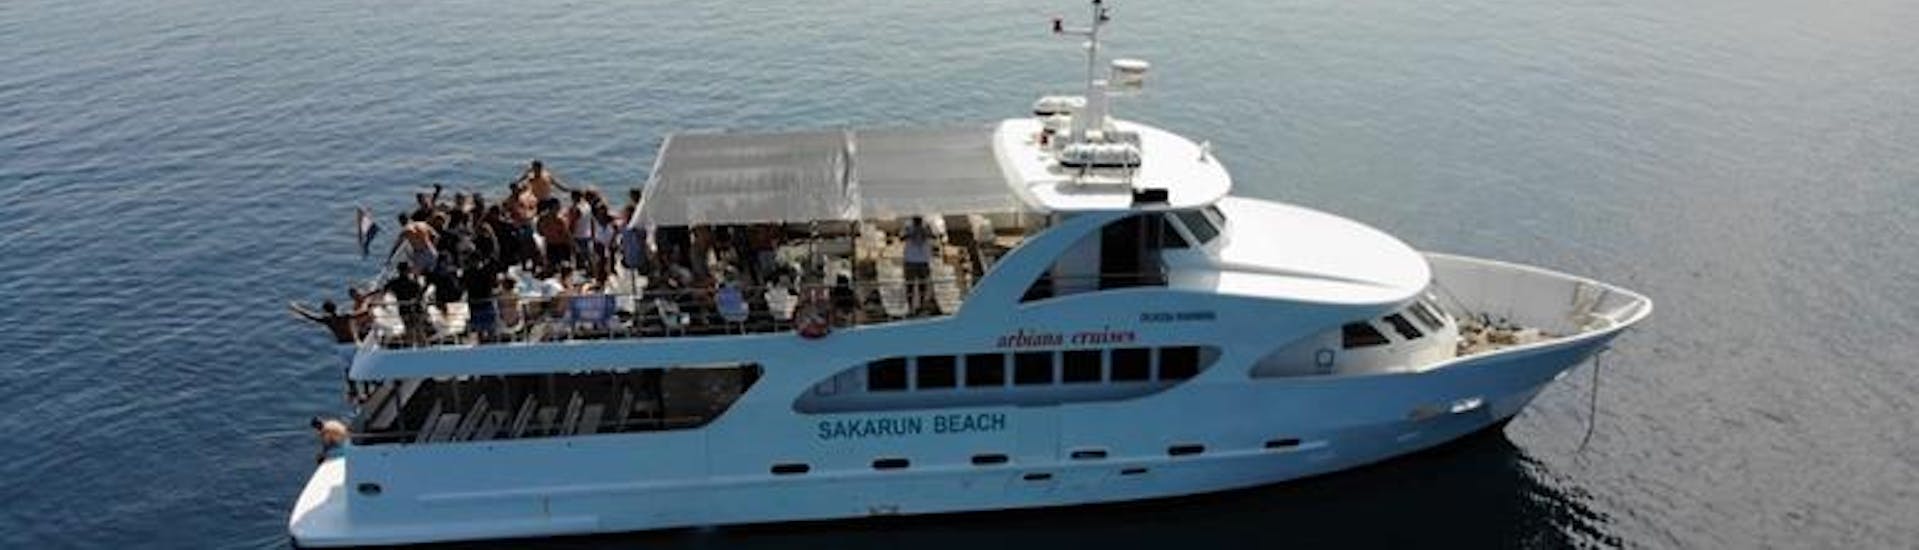 Balade en bateau Zadar - Beach Sakarun avec Baignade & Observation de la faune.